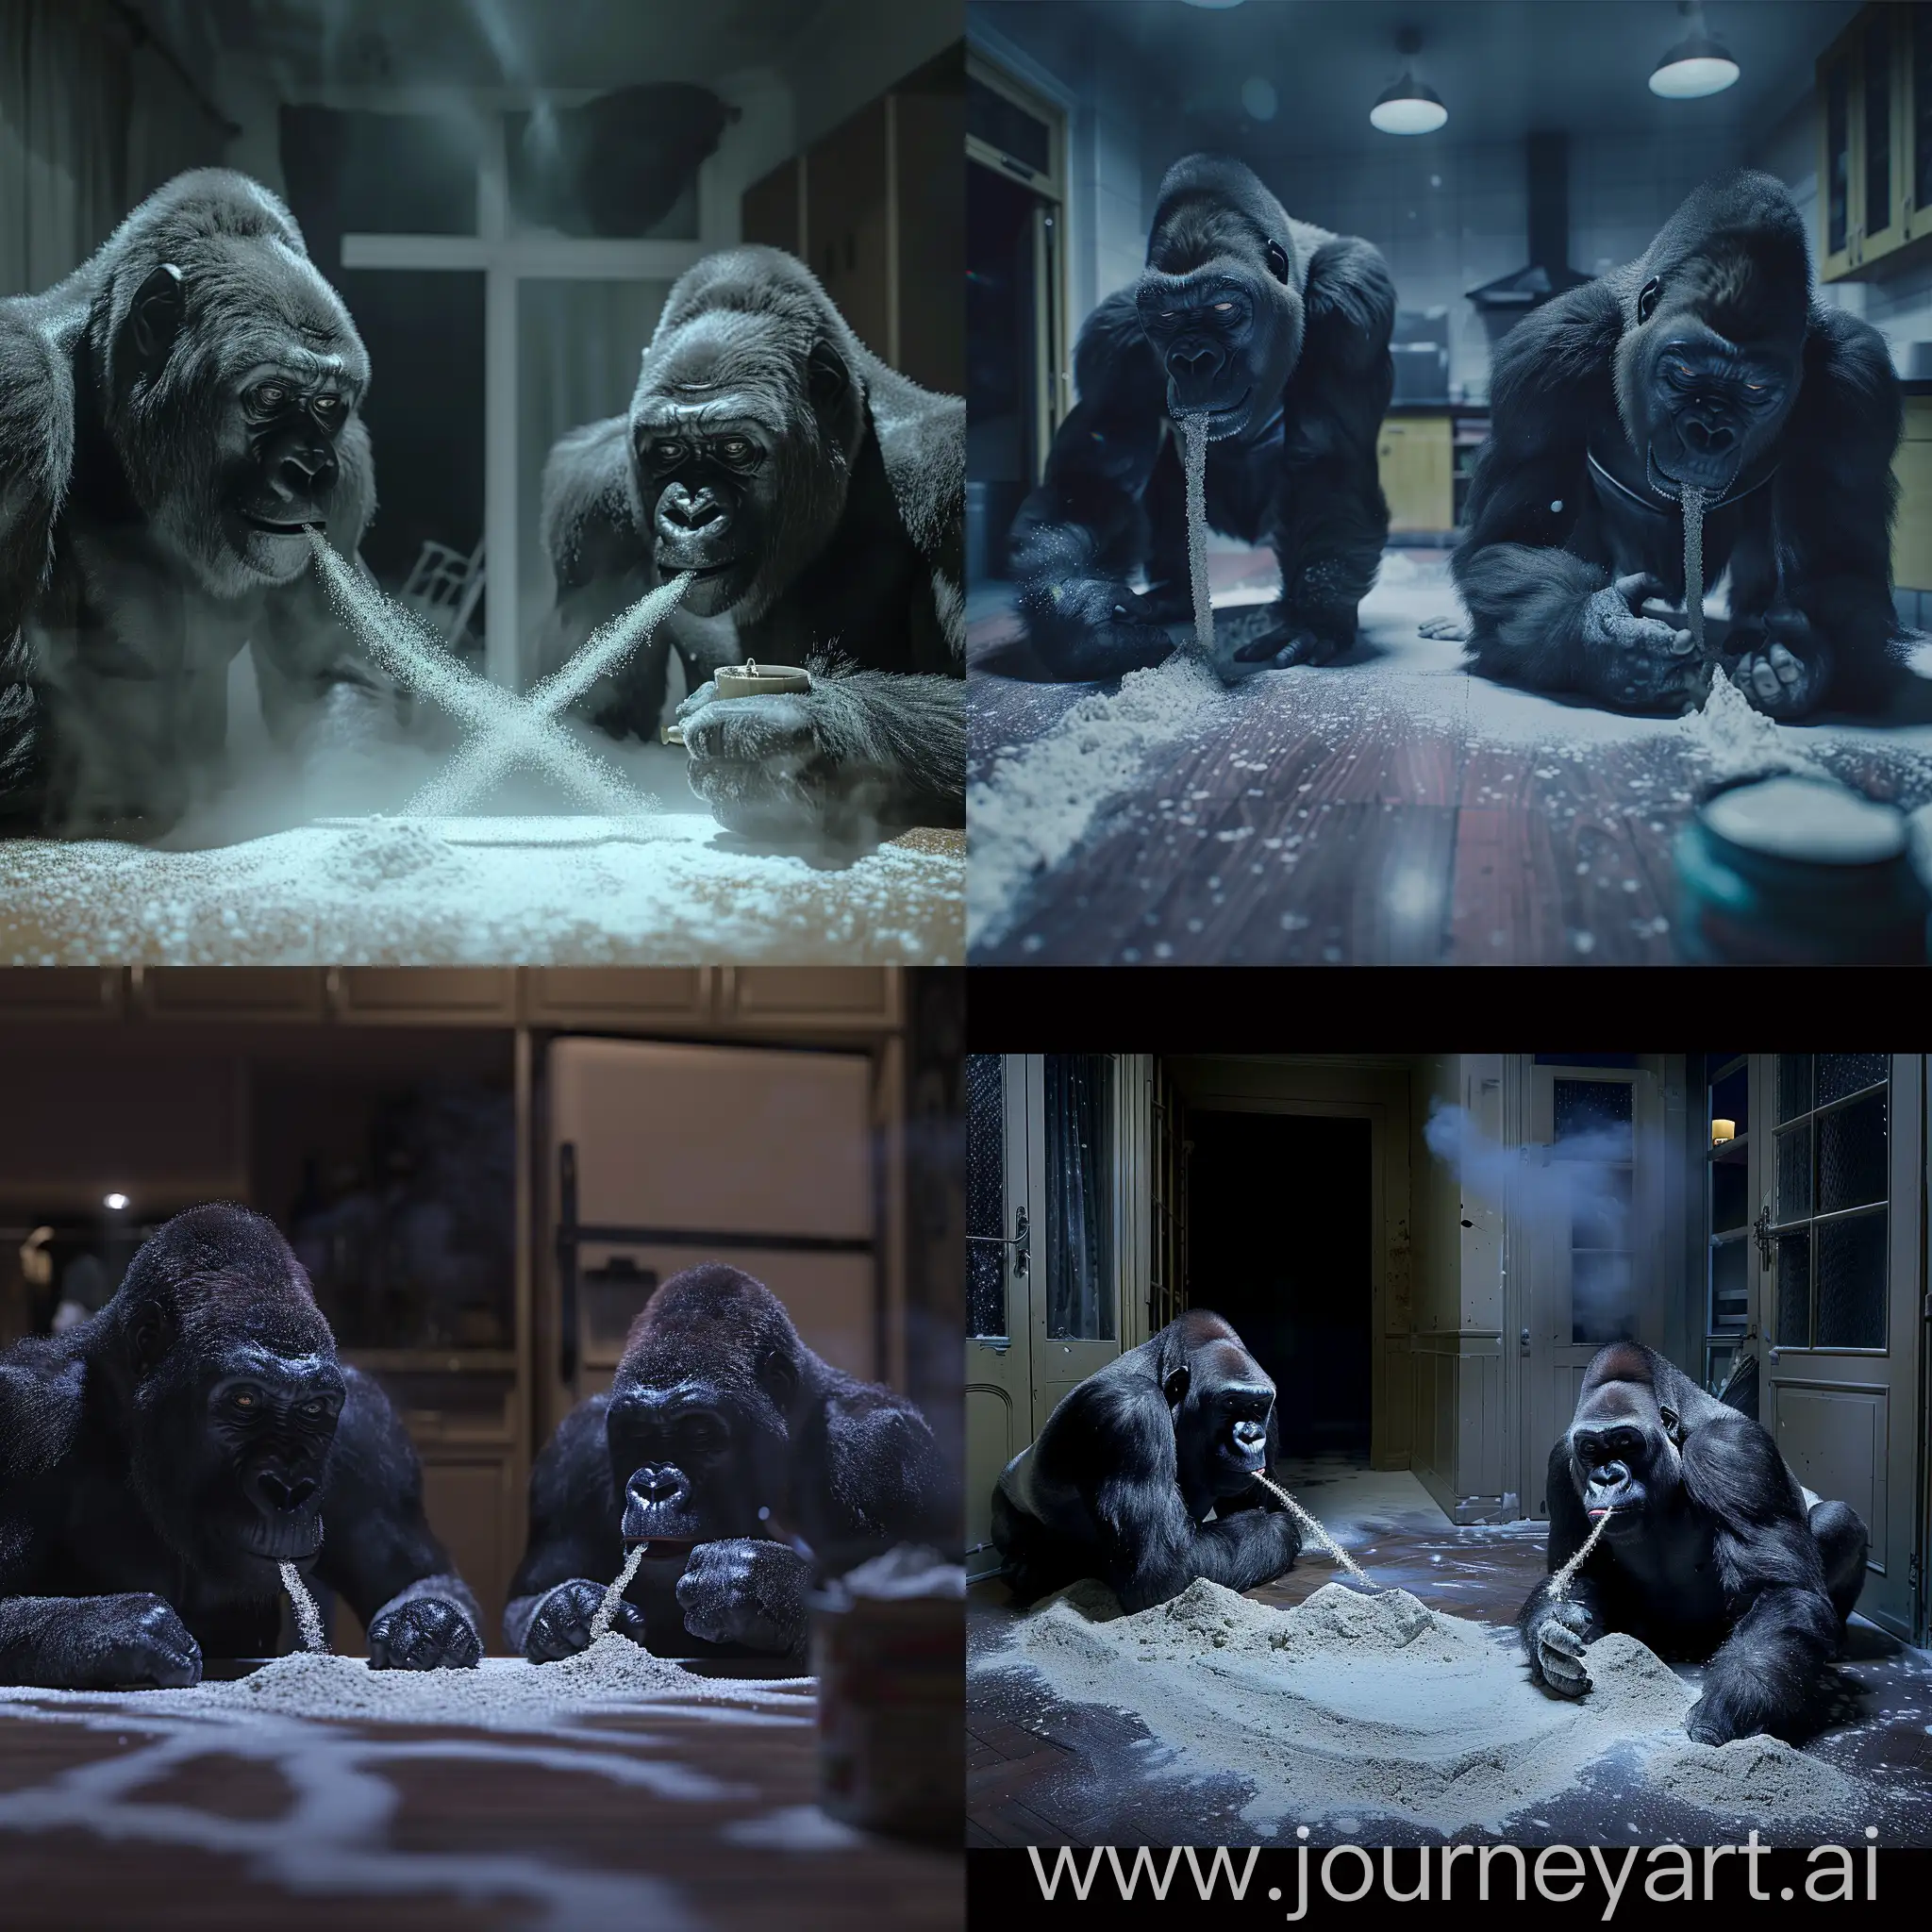 Nighttime-Gorilla-Encounter-Realistic-4K-Image-of-Flour-Snorting